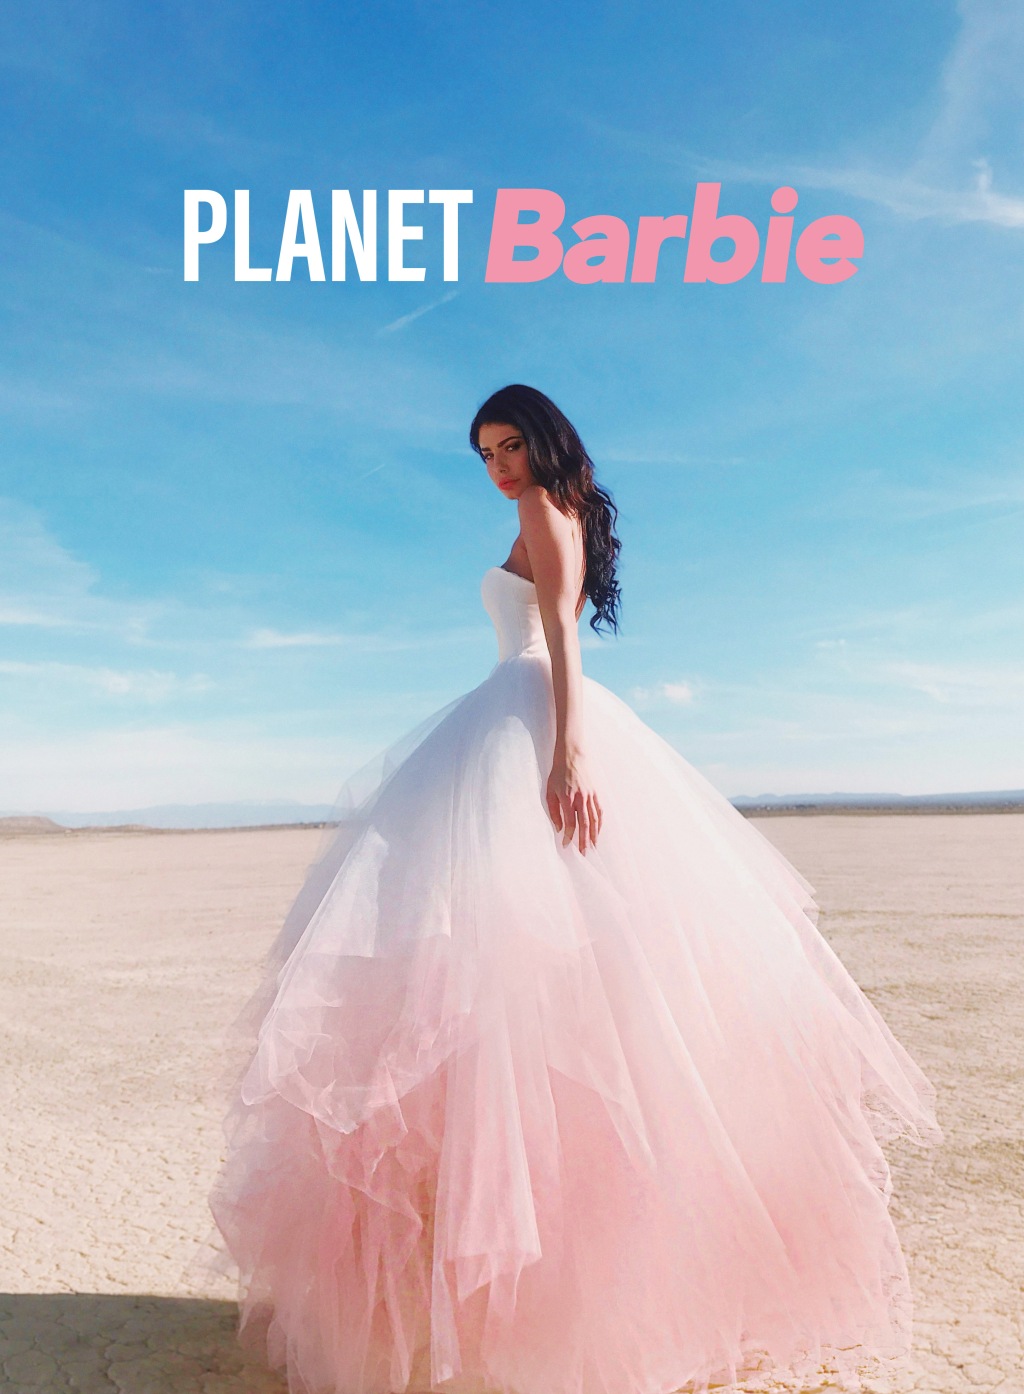 Planet Barbie